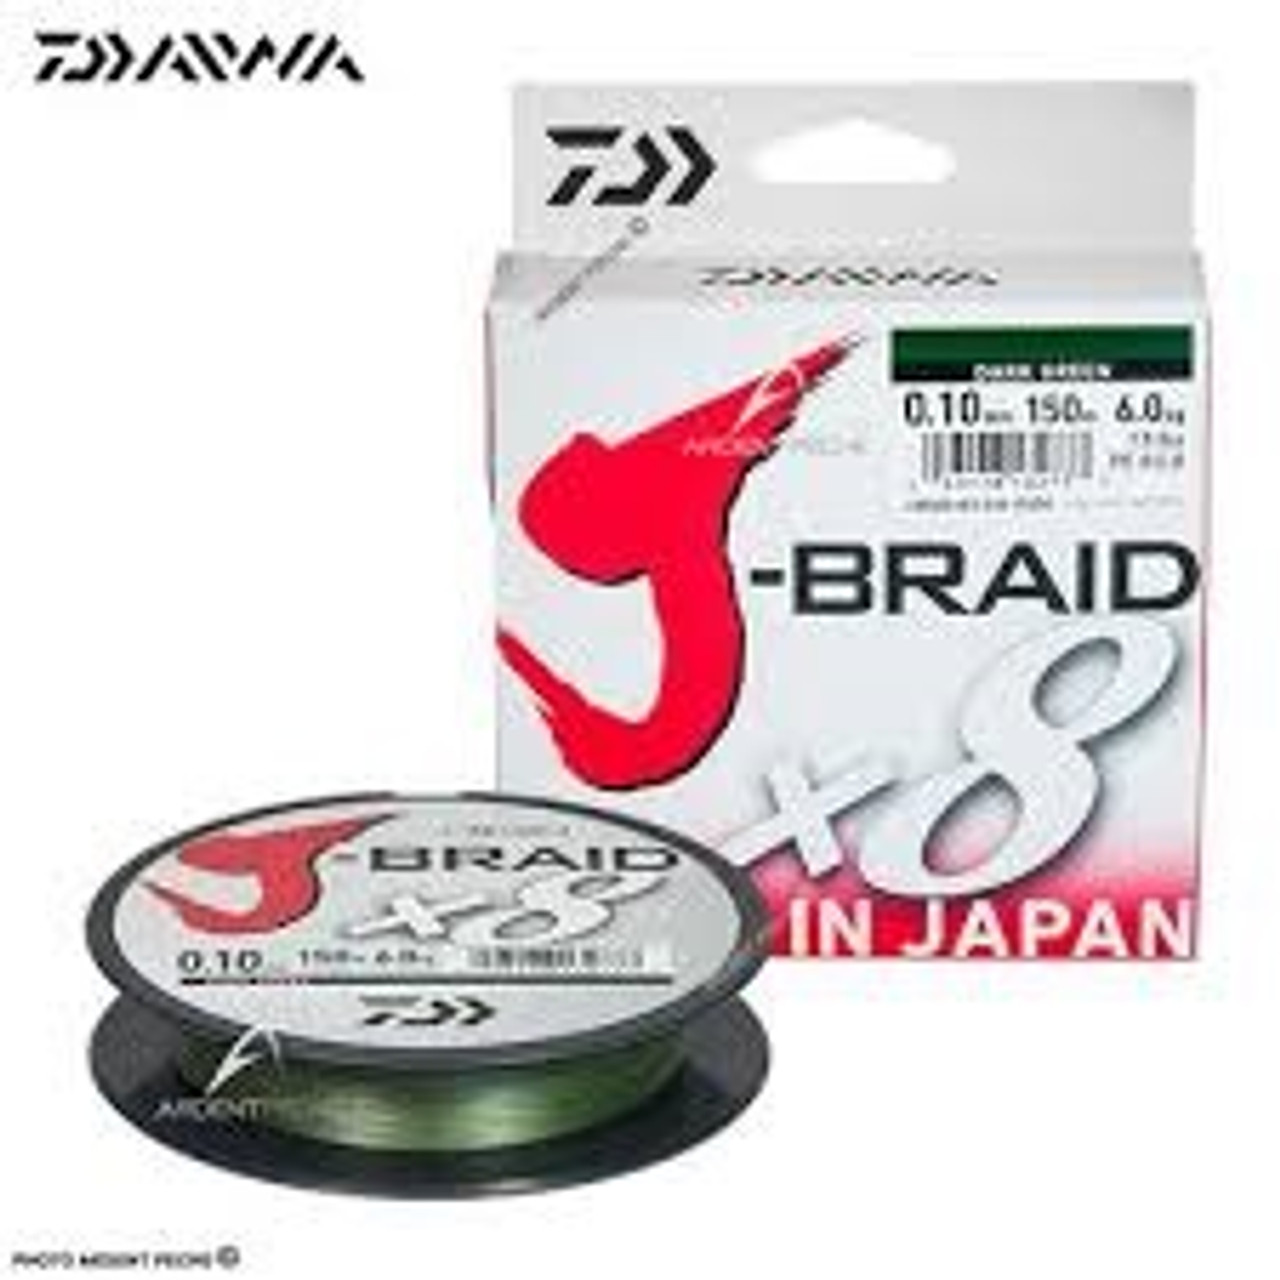 Daiwa J-BRAID x8 GRAND Braided Line